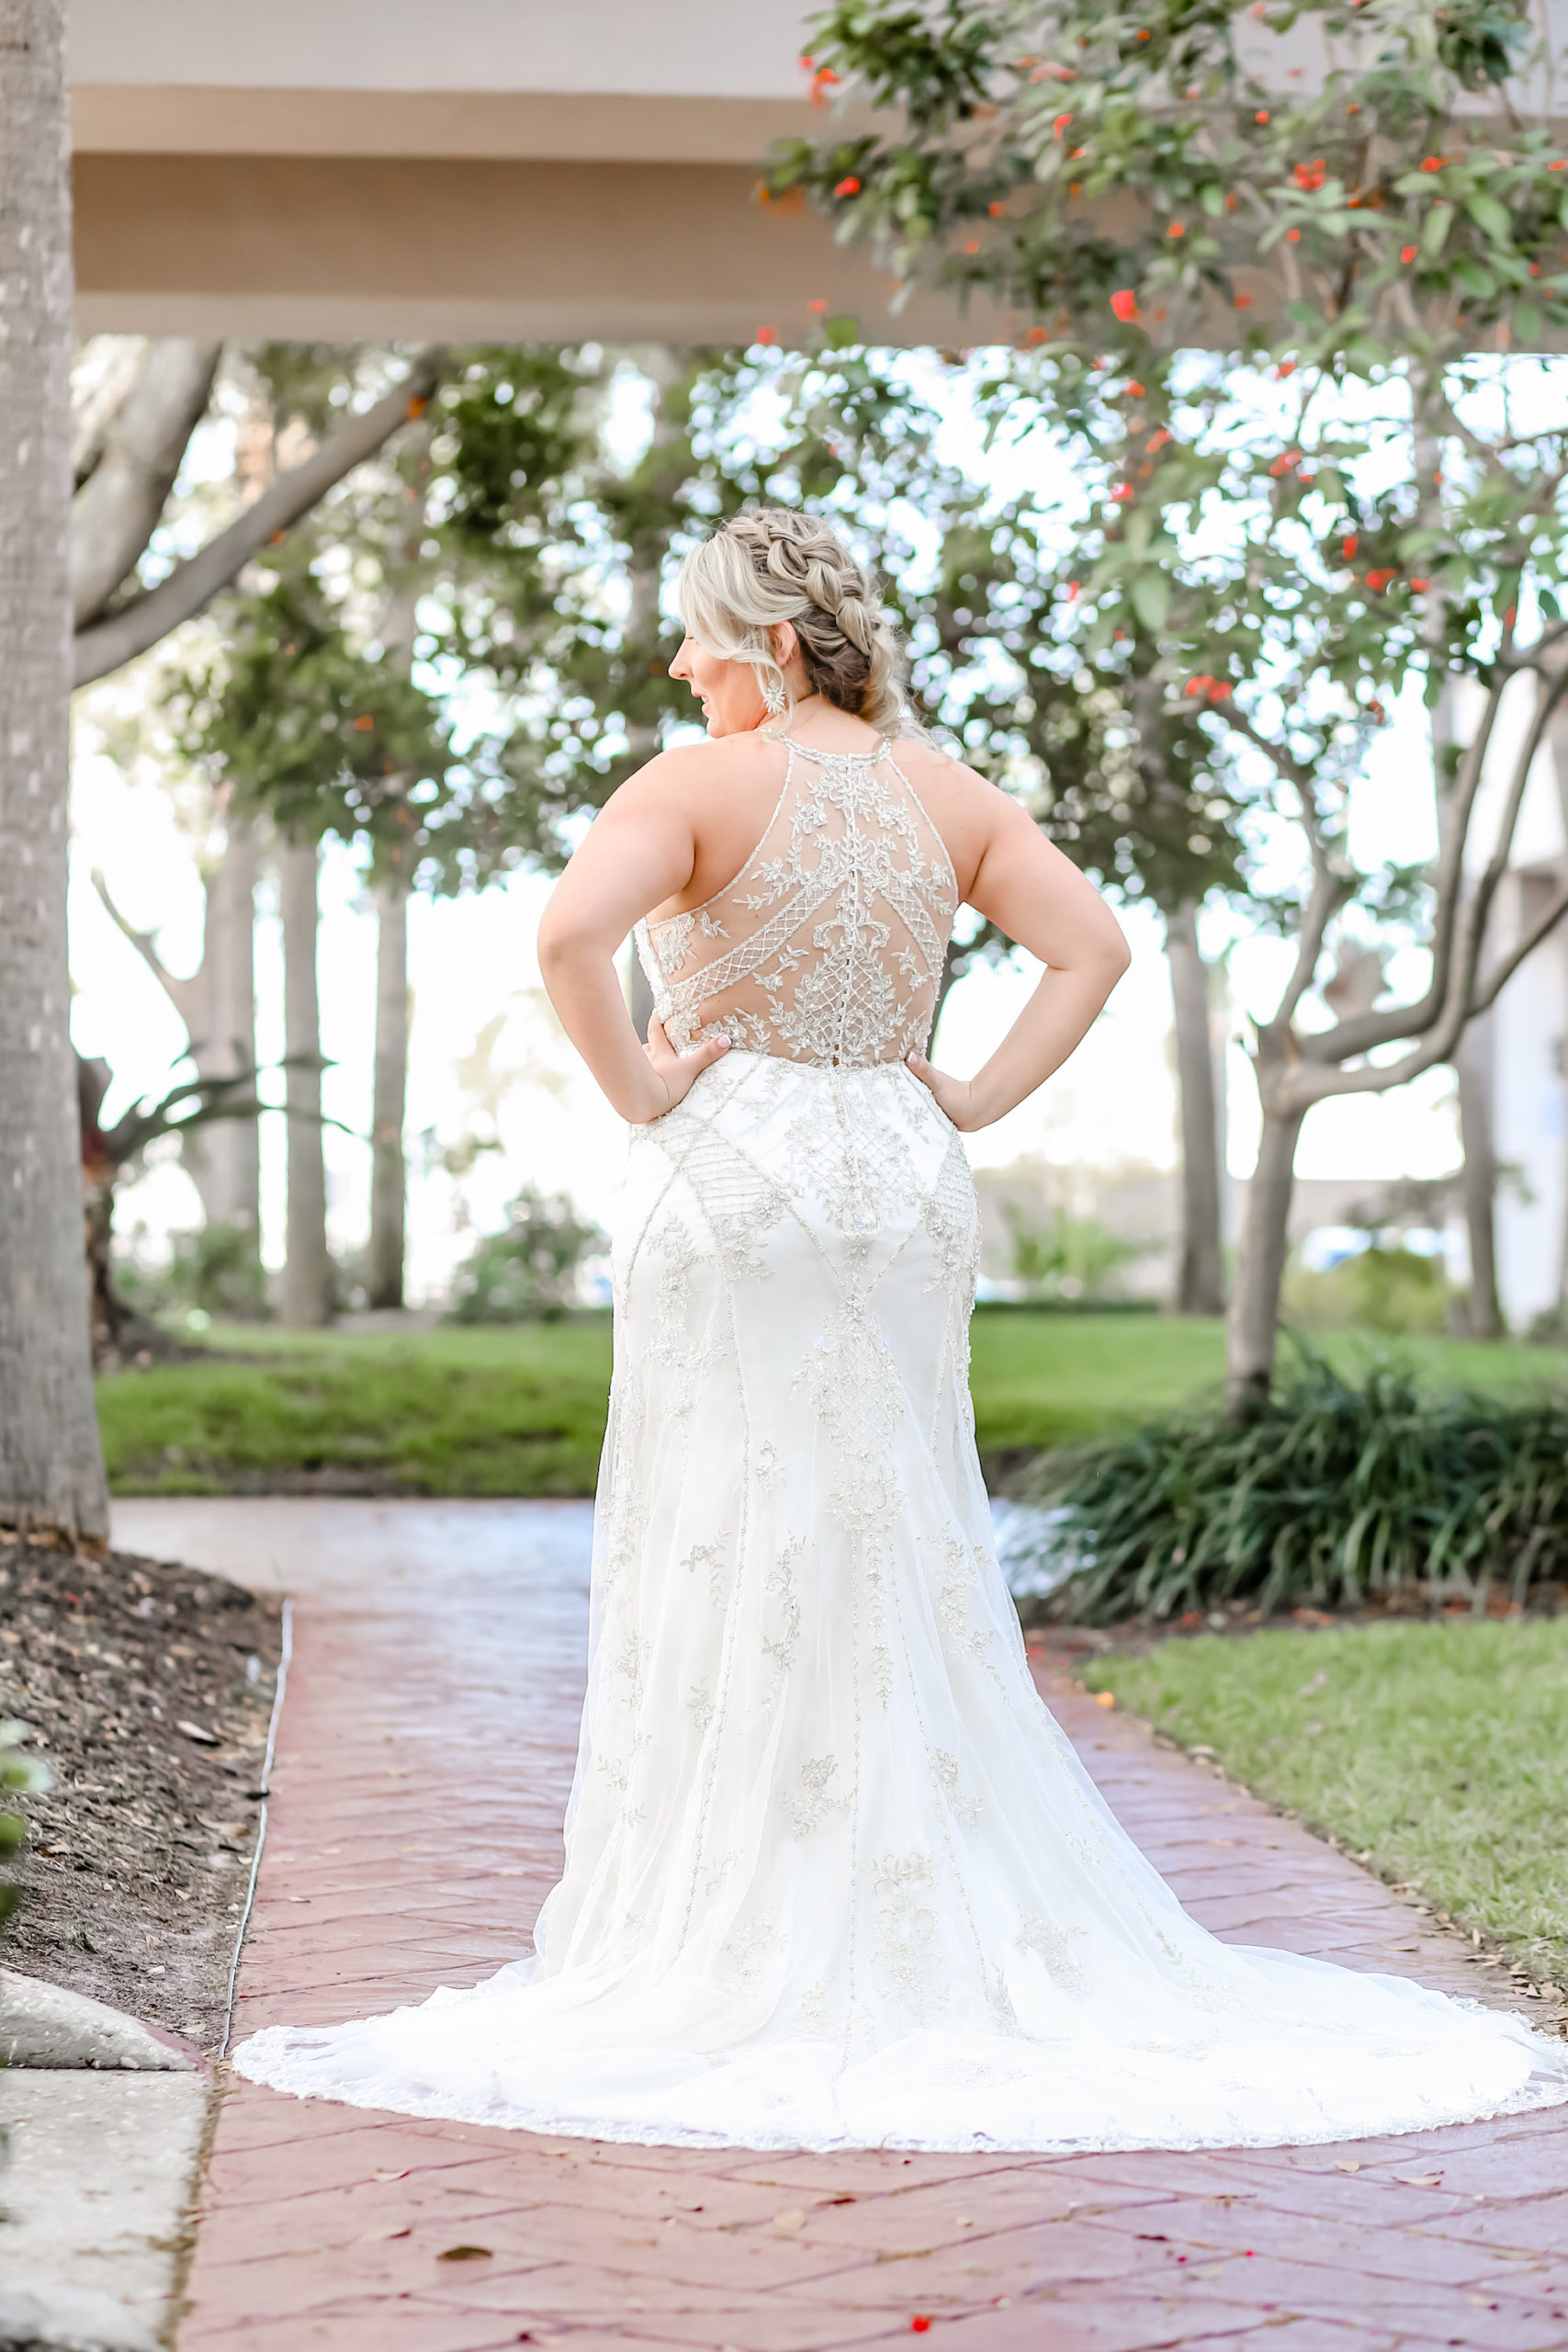 Florida Bridal Portrait, Back St. Pete Bride in Embellished Maggie Sottero Wedding Dress | Tampa Bay Wedding Photographer Lifelong Photography Studios